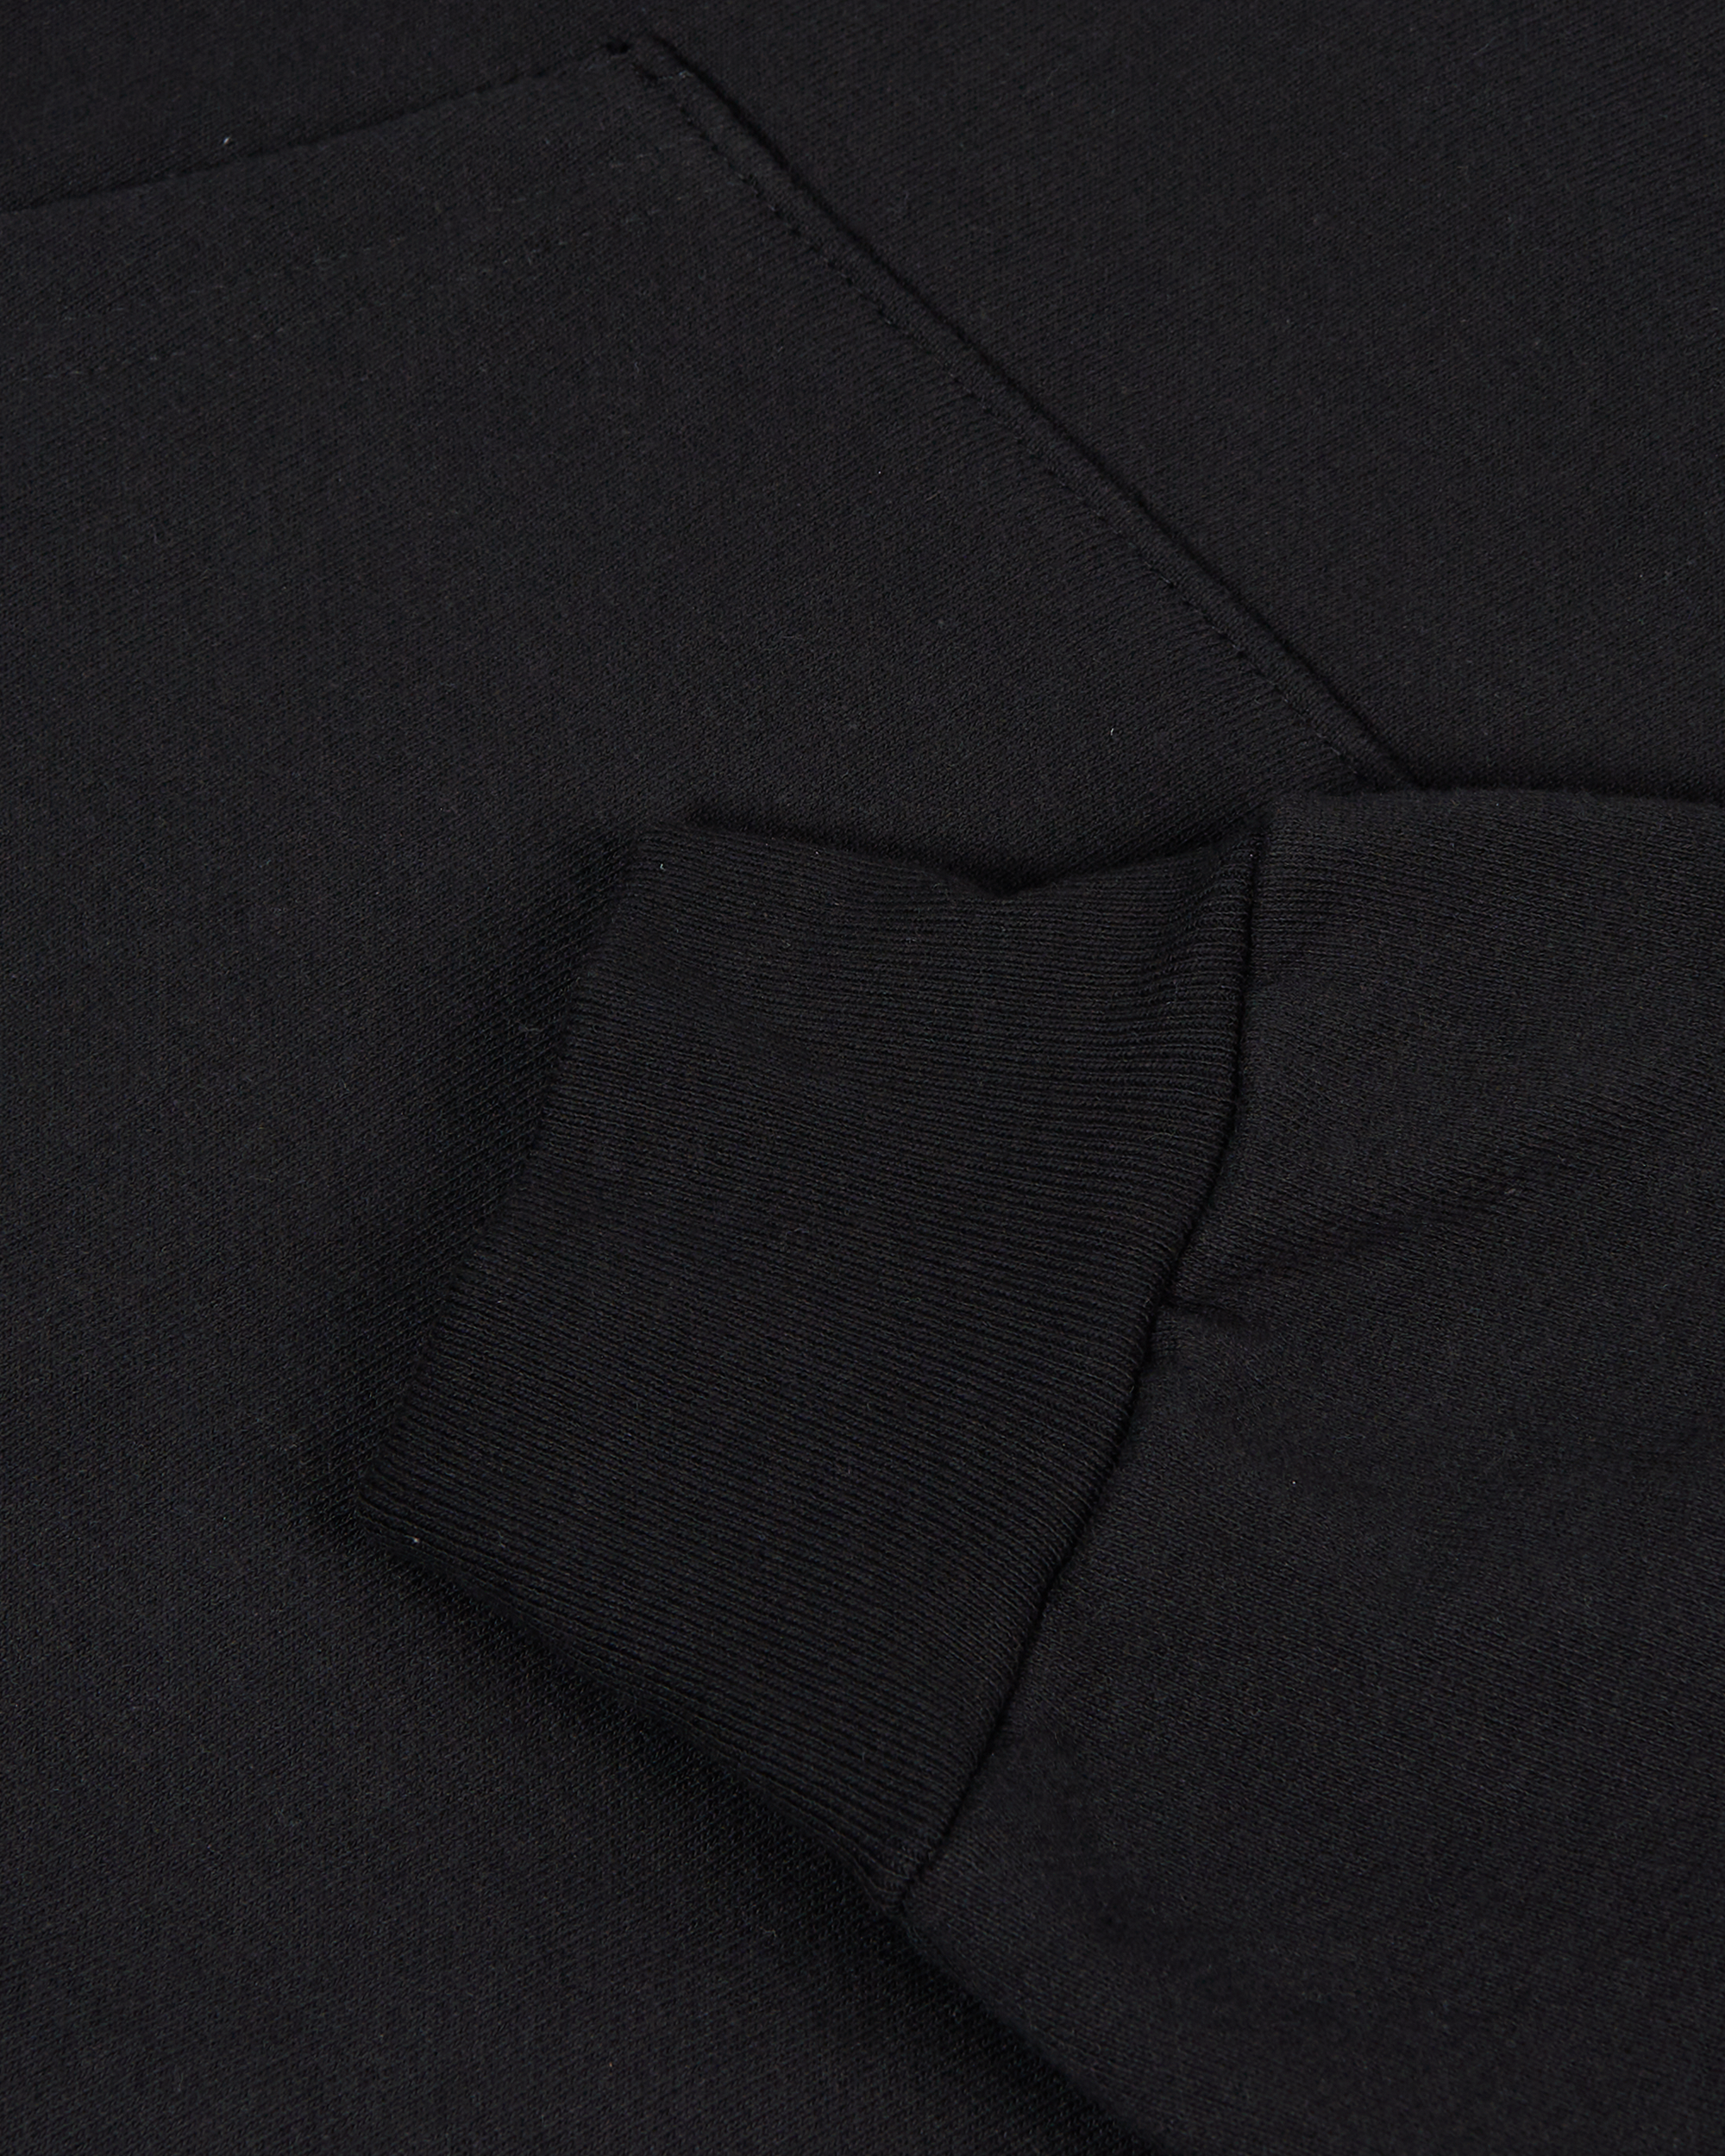 Refurbishing Hooded Sweatshirt - Black